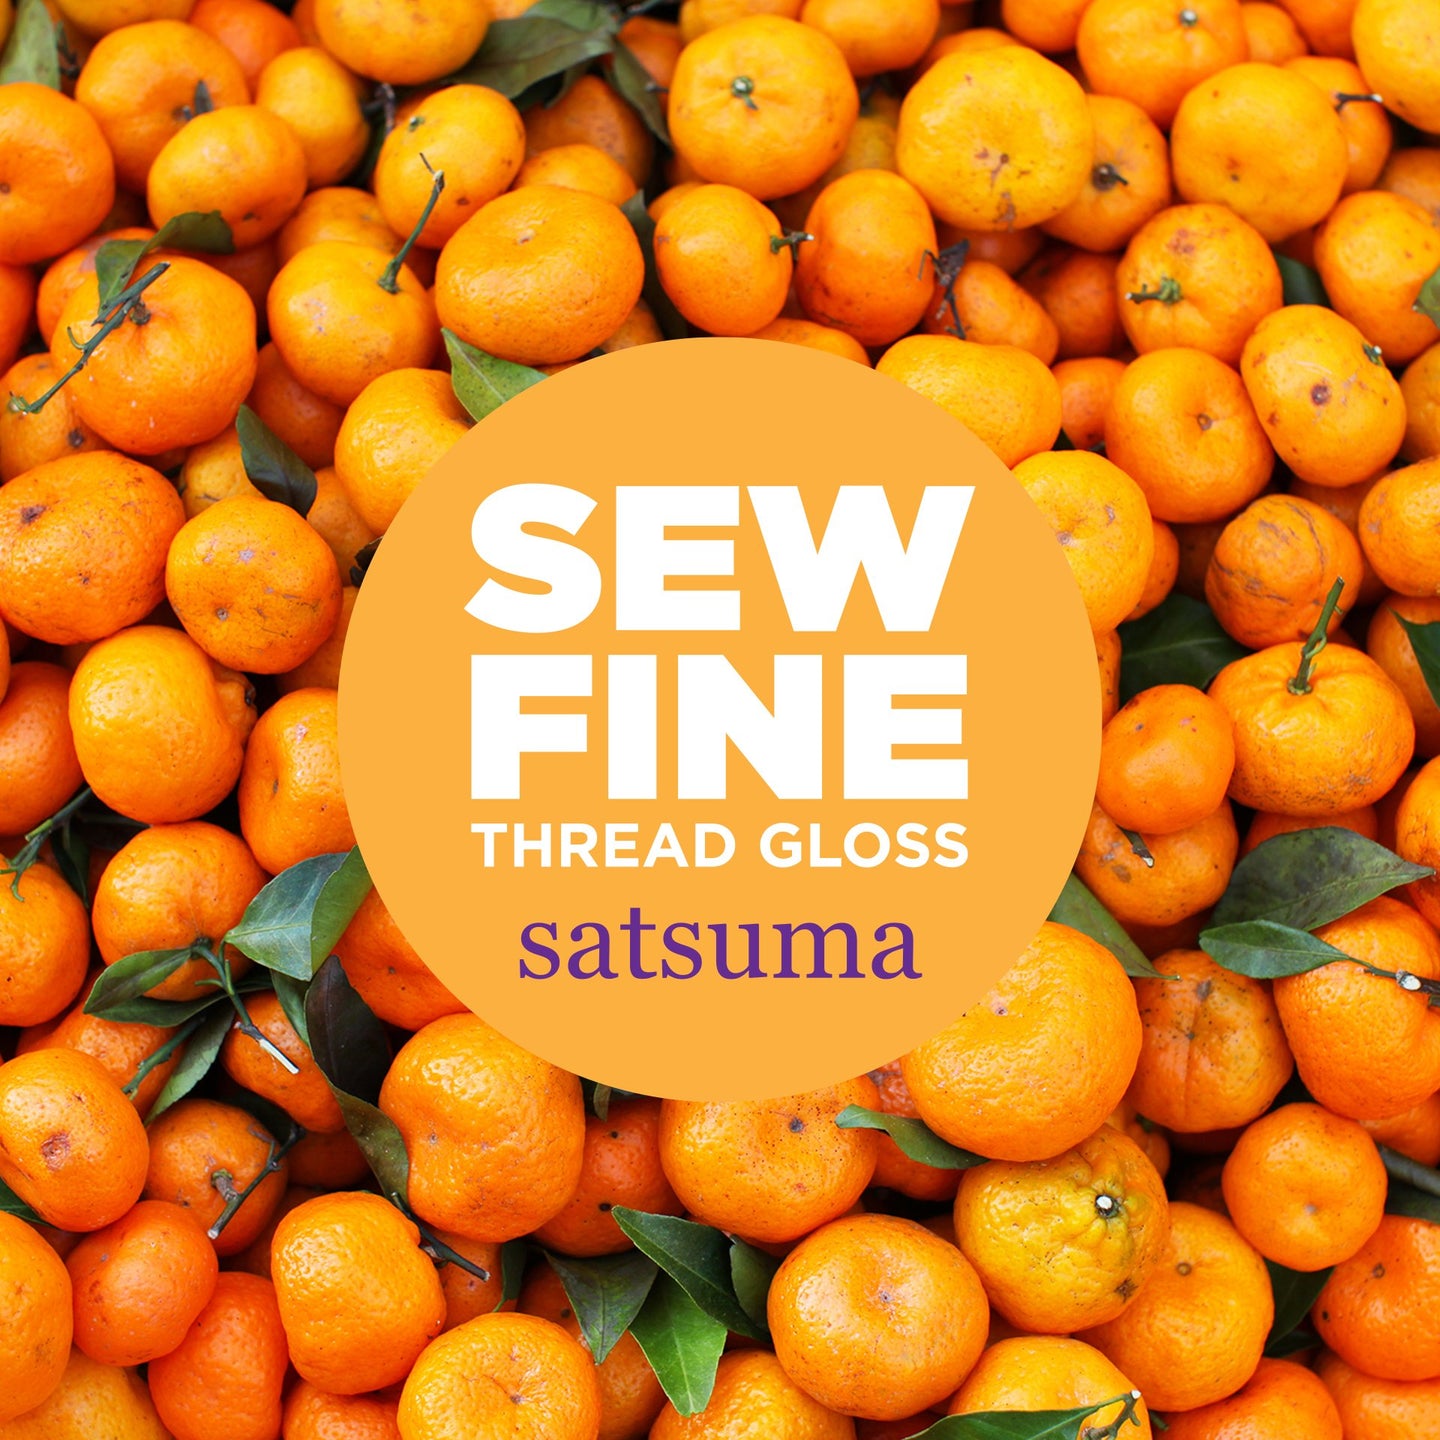 Sew Fine Thread Gloss Satsuma